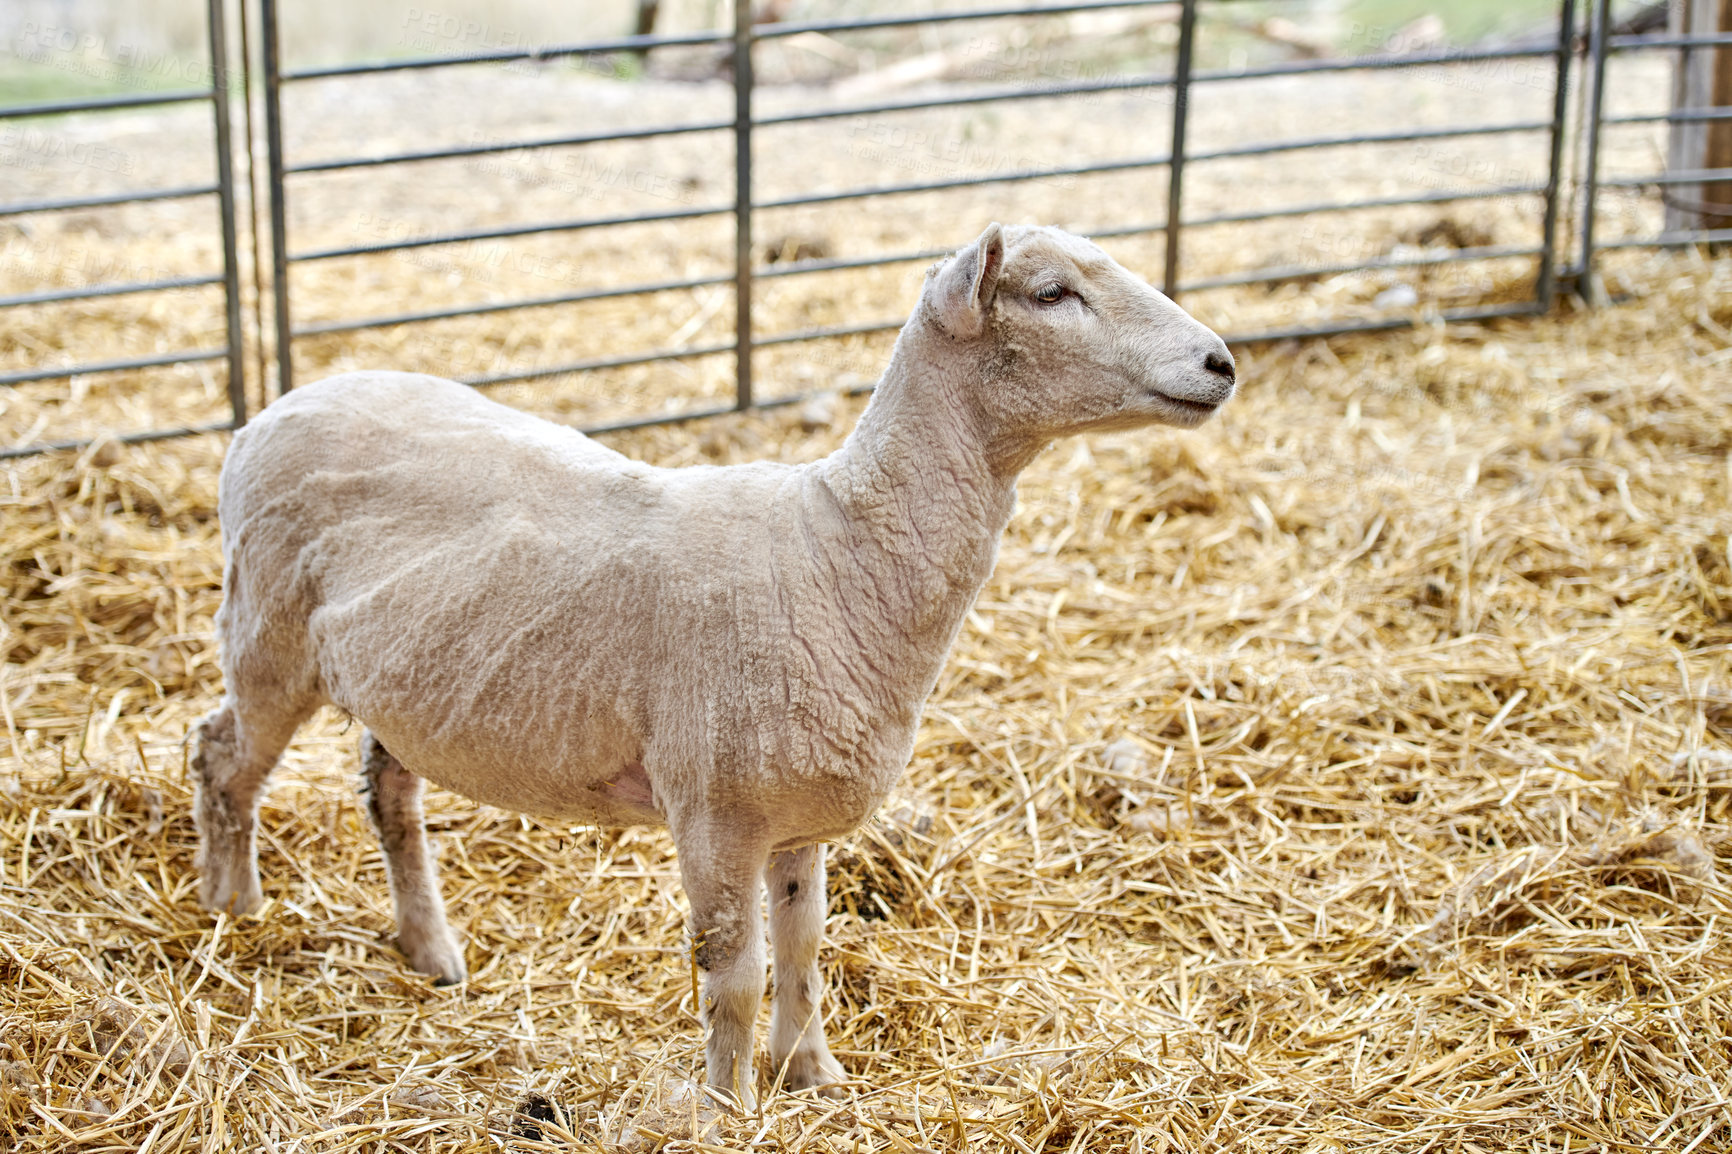 Buy stock photo A series of photos of lamb and sheep